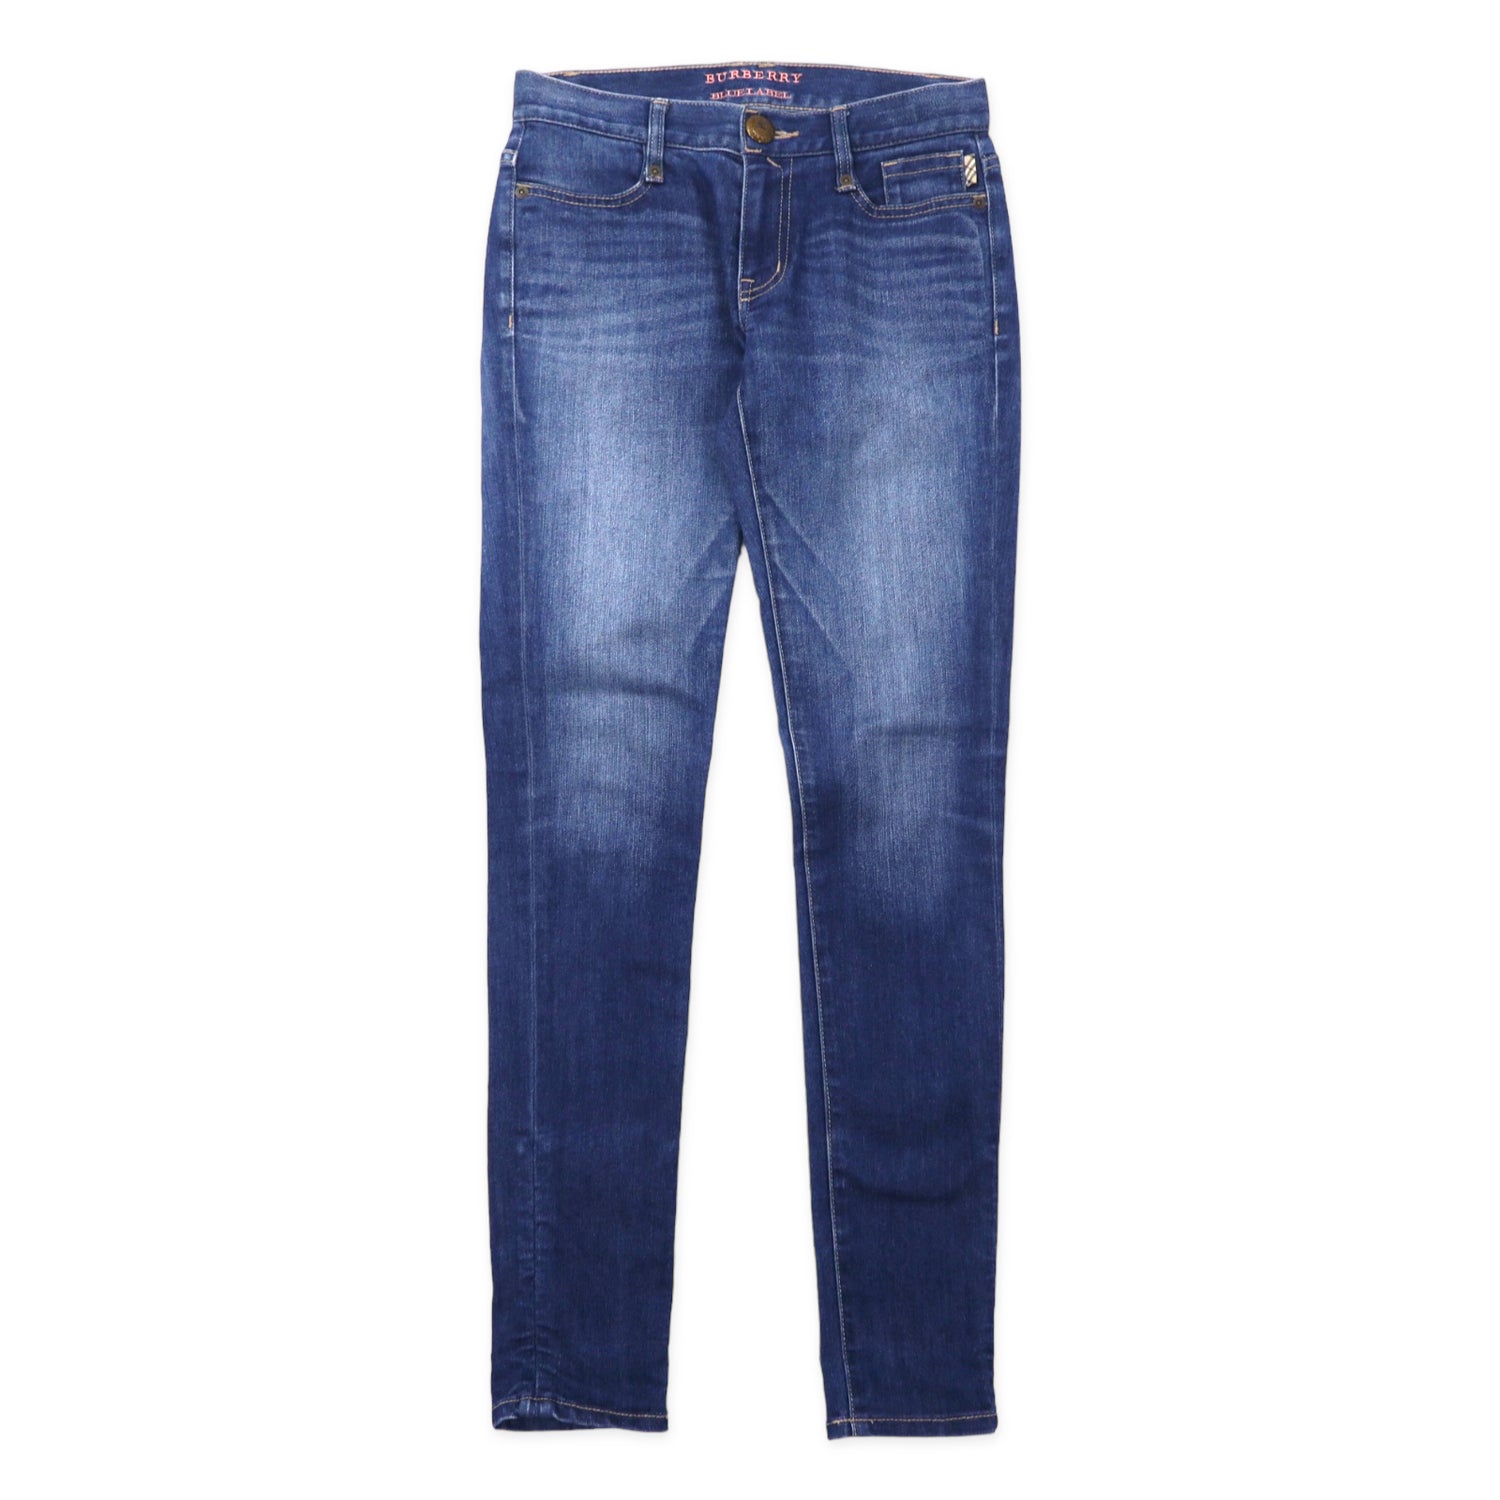 BURBERRY BLUE LABEL Slimfit Skini Jeans Denim Pants 36 Blue Cotton 